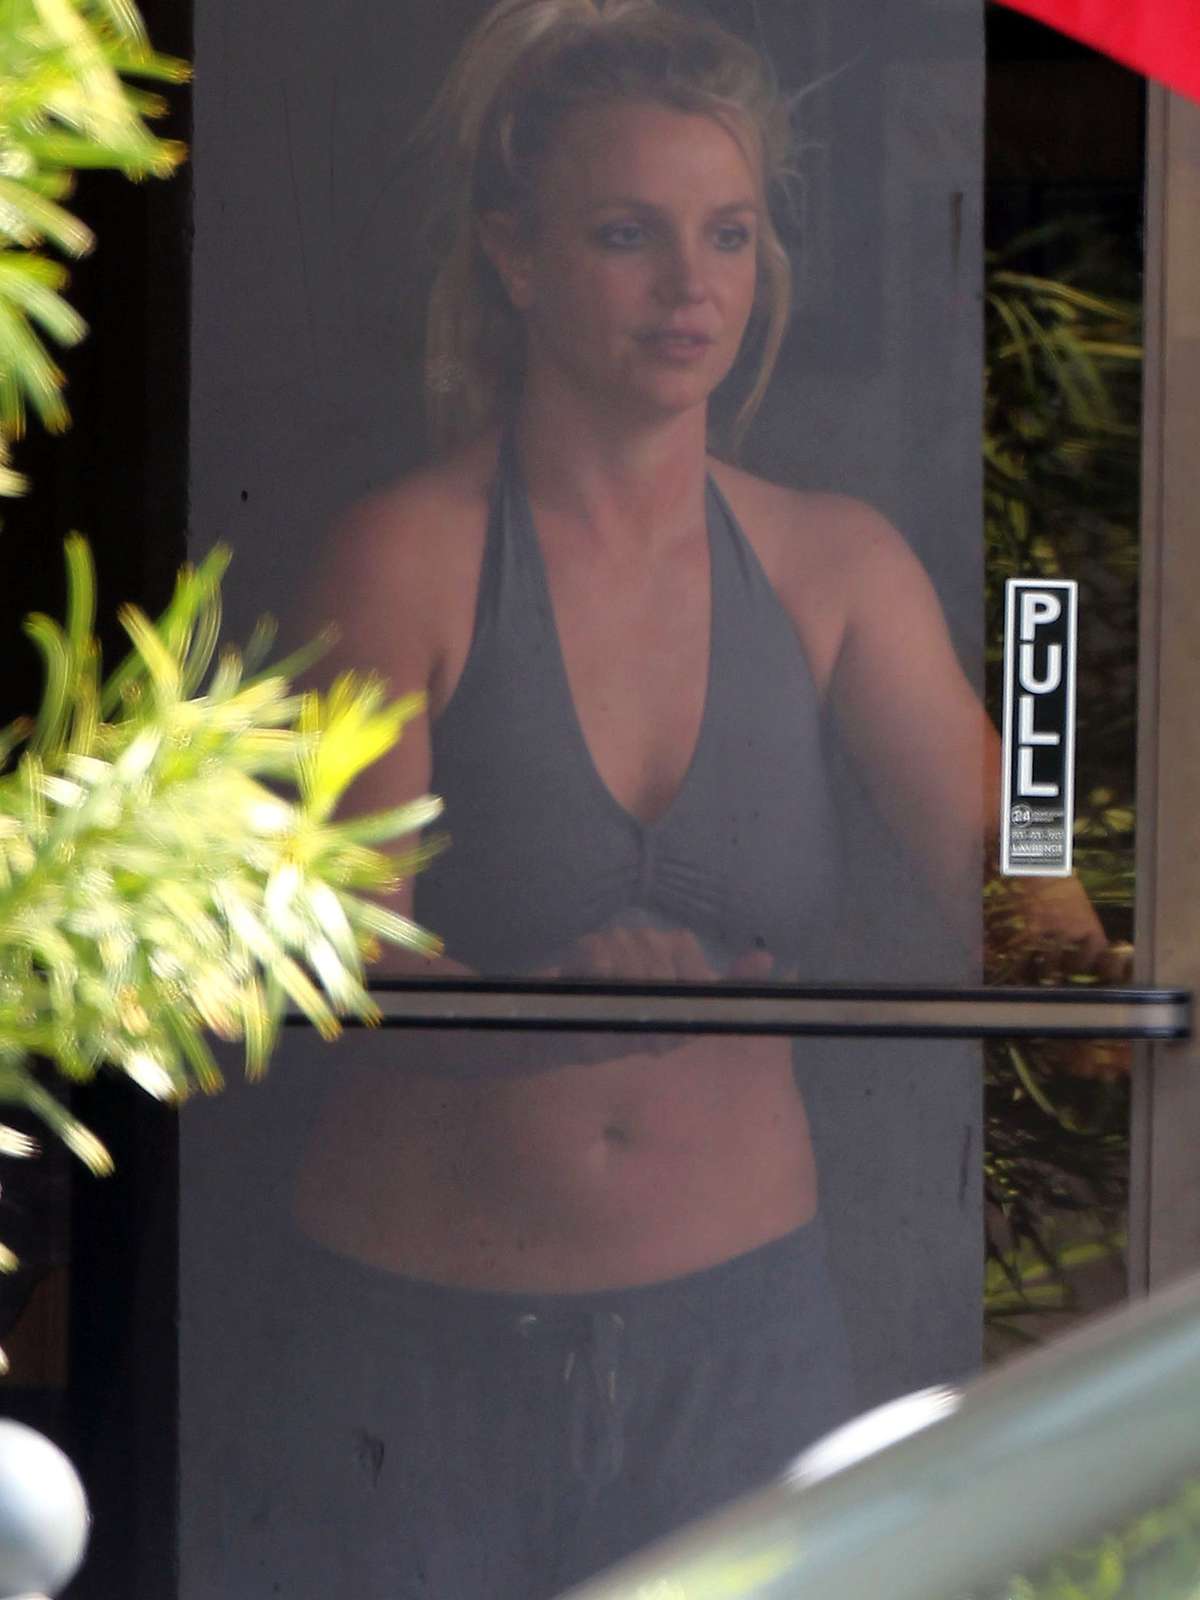 De top, Britney Spears exibe barriga em forma